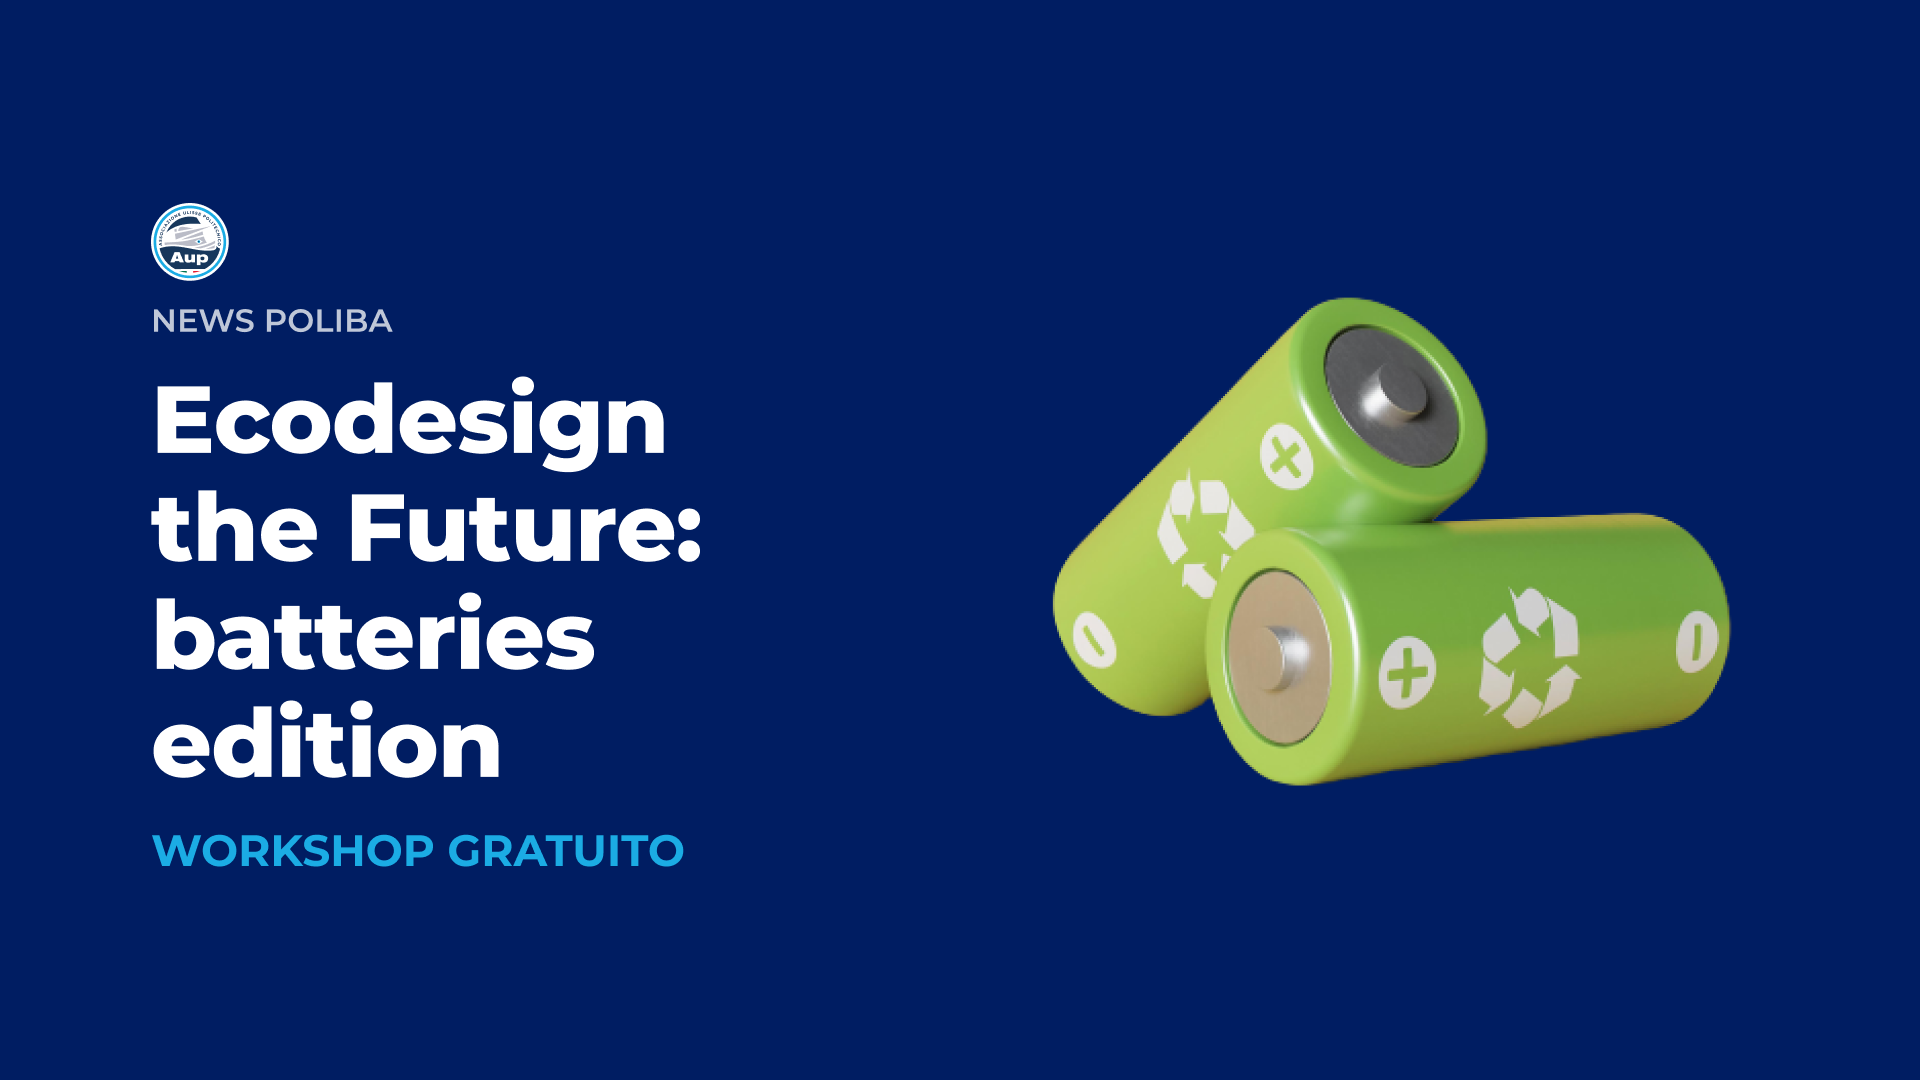 WORKSHOP GRATUITO “Ecodesign the Future: batteries edition